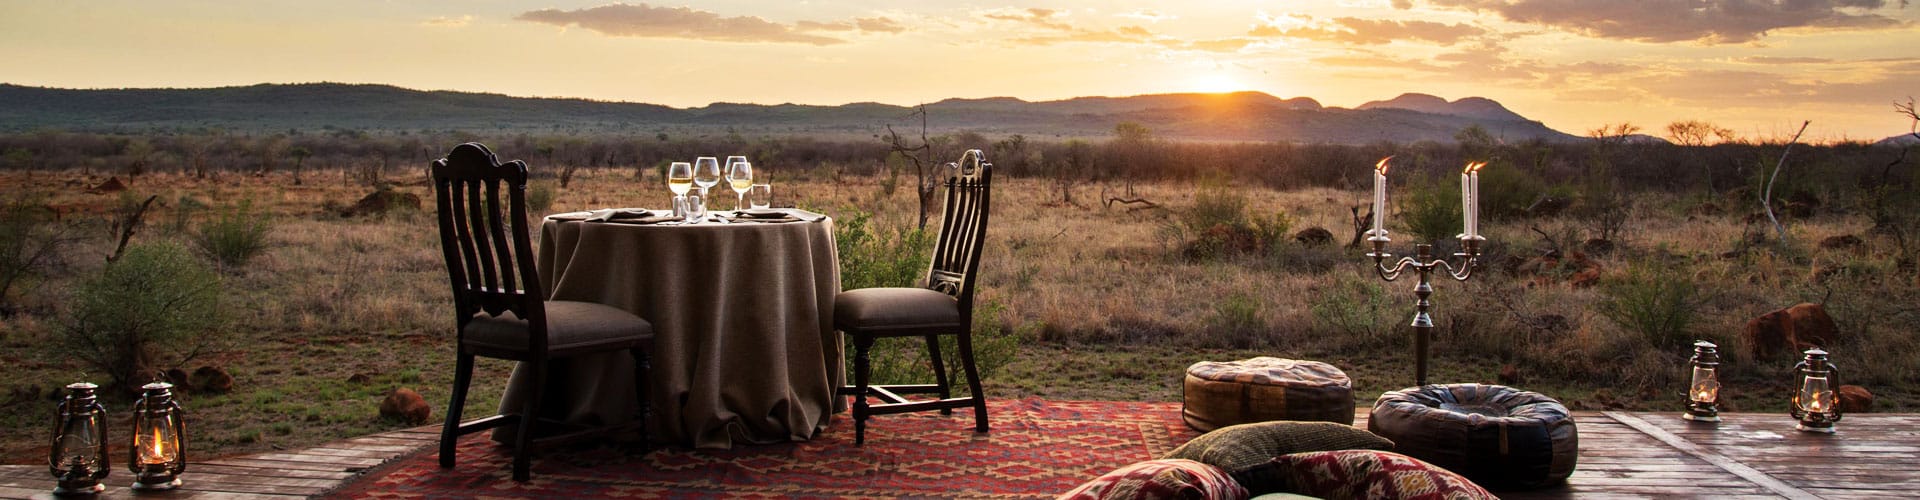 Tanzania Luxury honeymoon safari